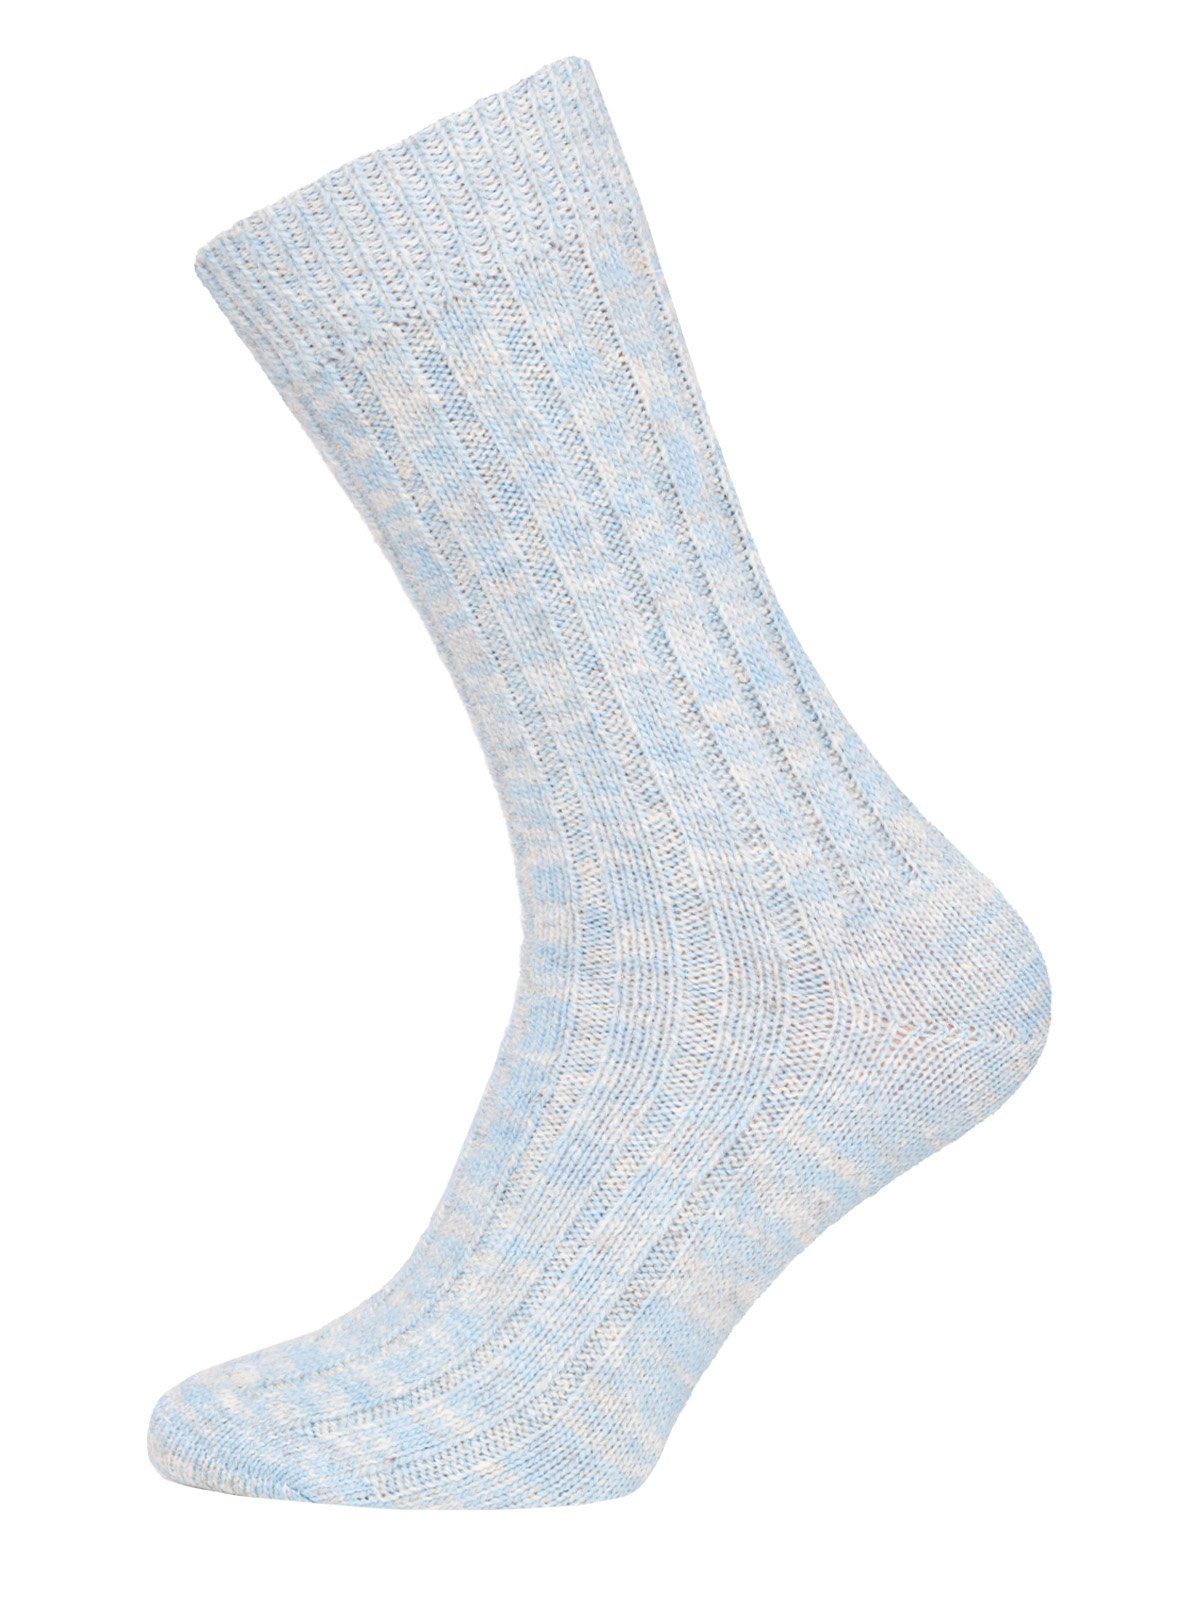 HomeOfSocks Socken Melierte Wollsocken aus 75% Wolle (Schurwolle) (Paar, 1 Paar) Dünne und warme Wollsocken mit 75% Wollanteil Hellblau